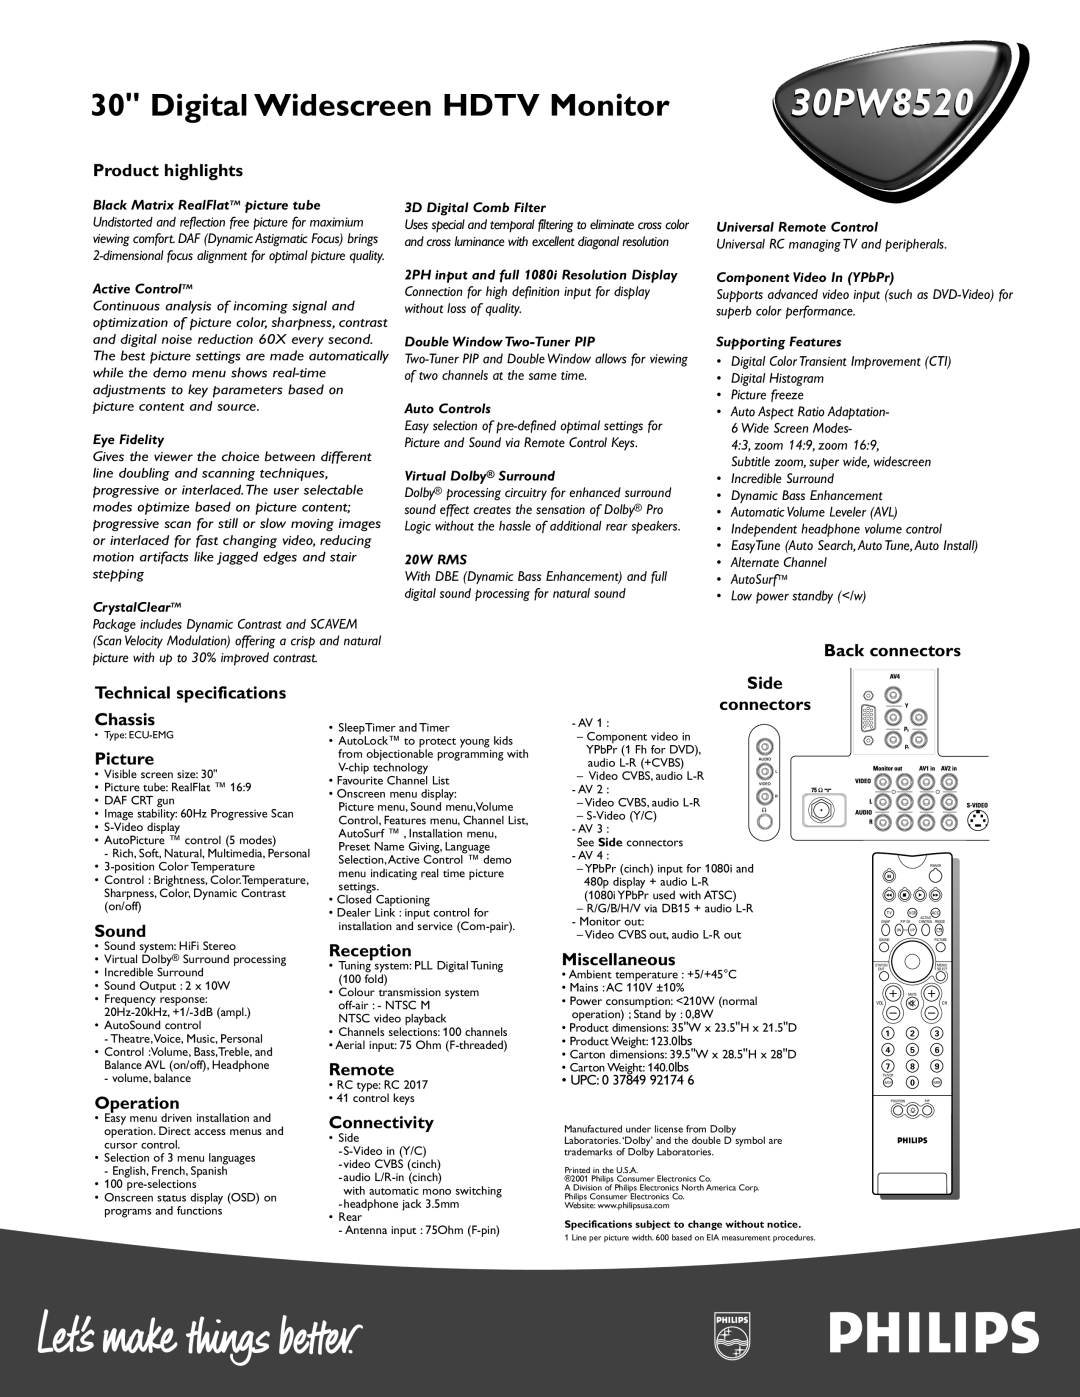 Philips 30PW8520 manual Digital Widescreen HDTV Monitor 